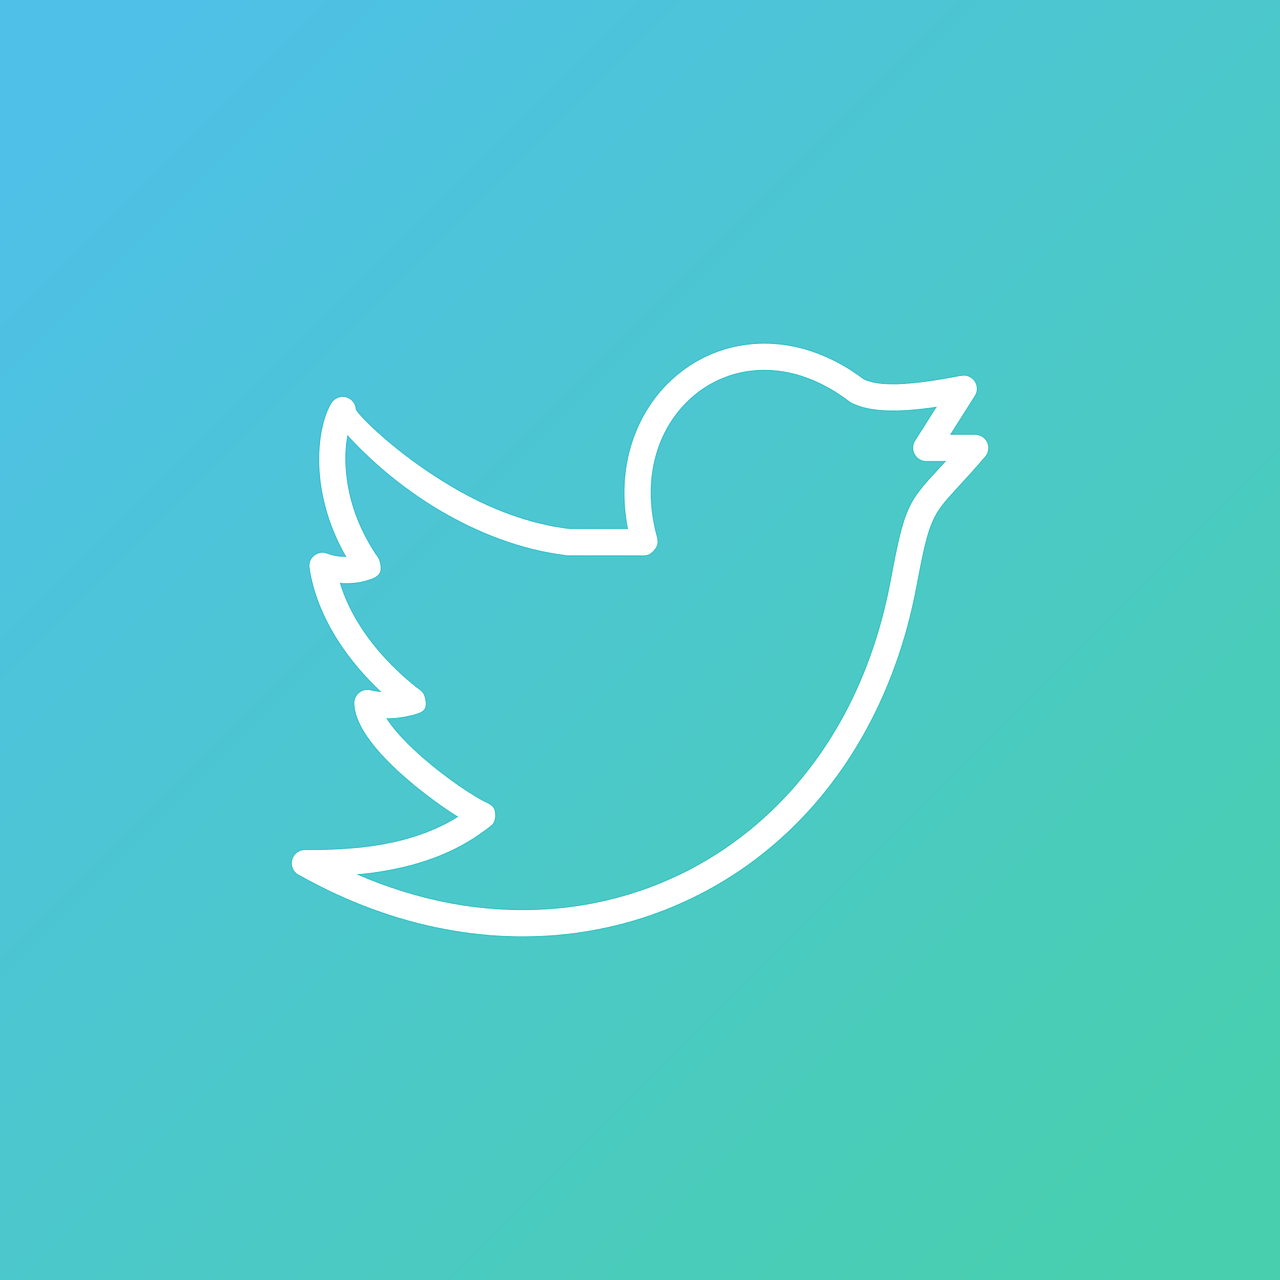 Hoe regelt u de klantenservice via Twitter?